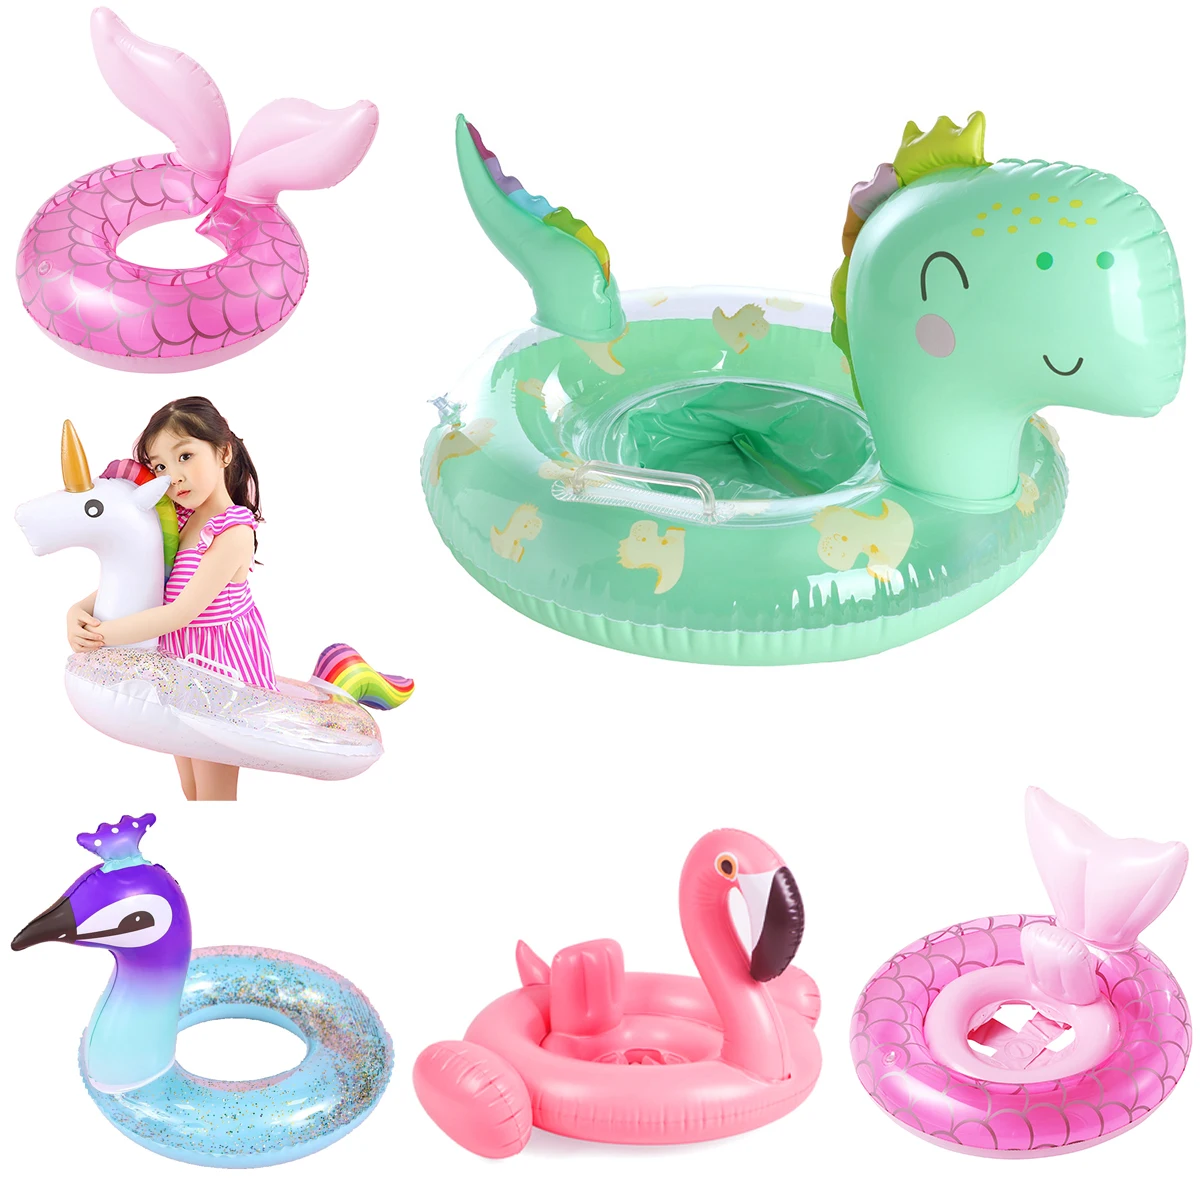 

Baby Pool Float Dinosaur Swim Ring Inflatable Flamingo Swimming Circle Inflatable Games for Kids Pool Toys Unicorn Mermaid